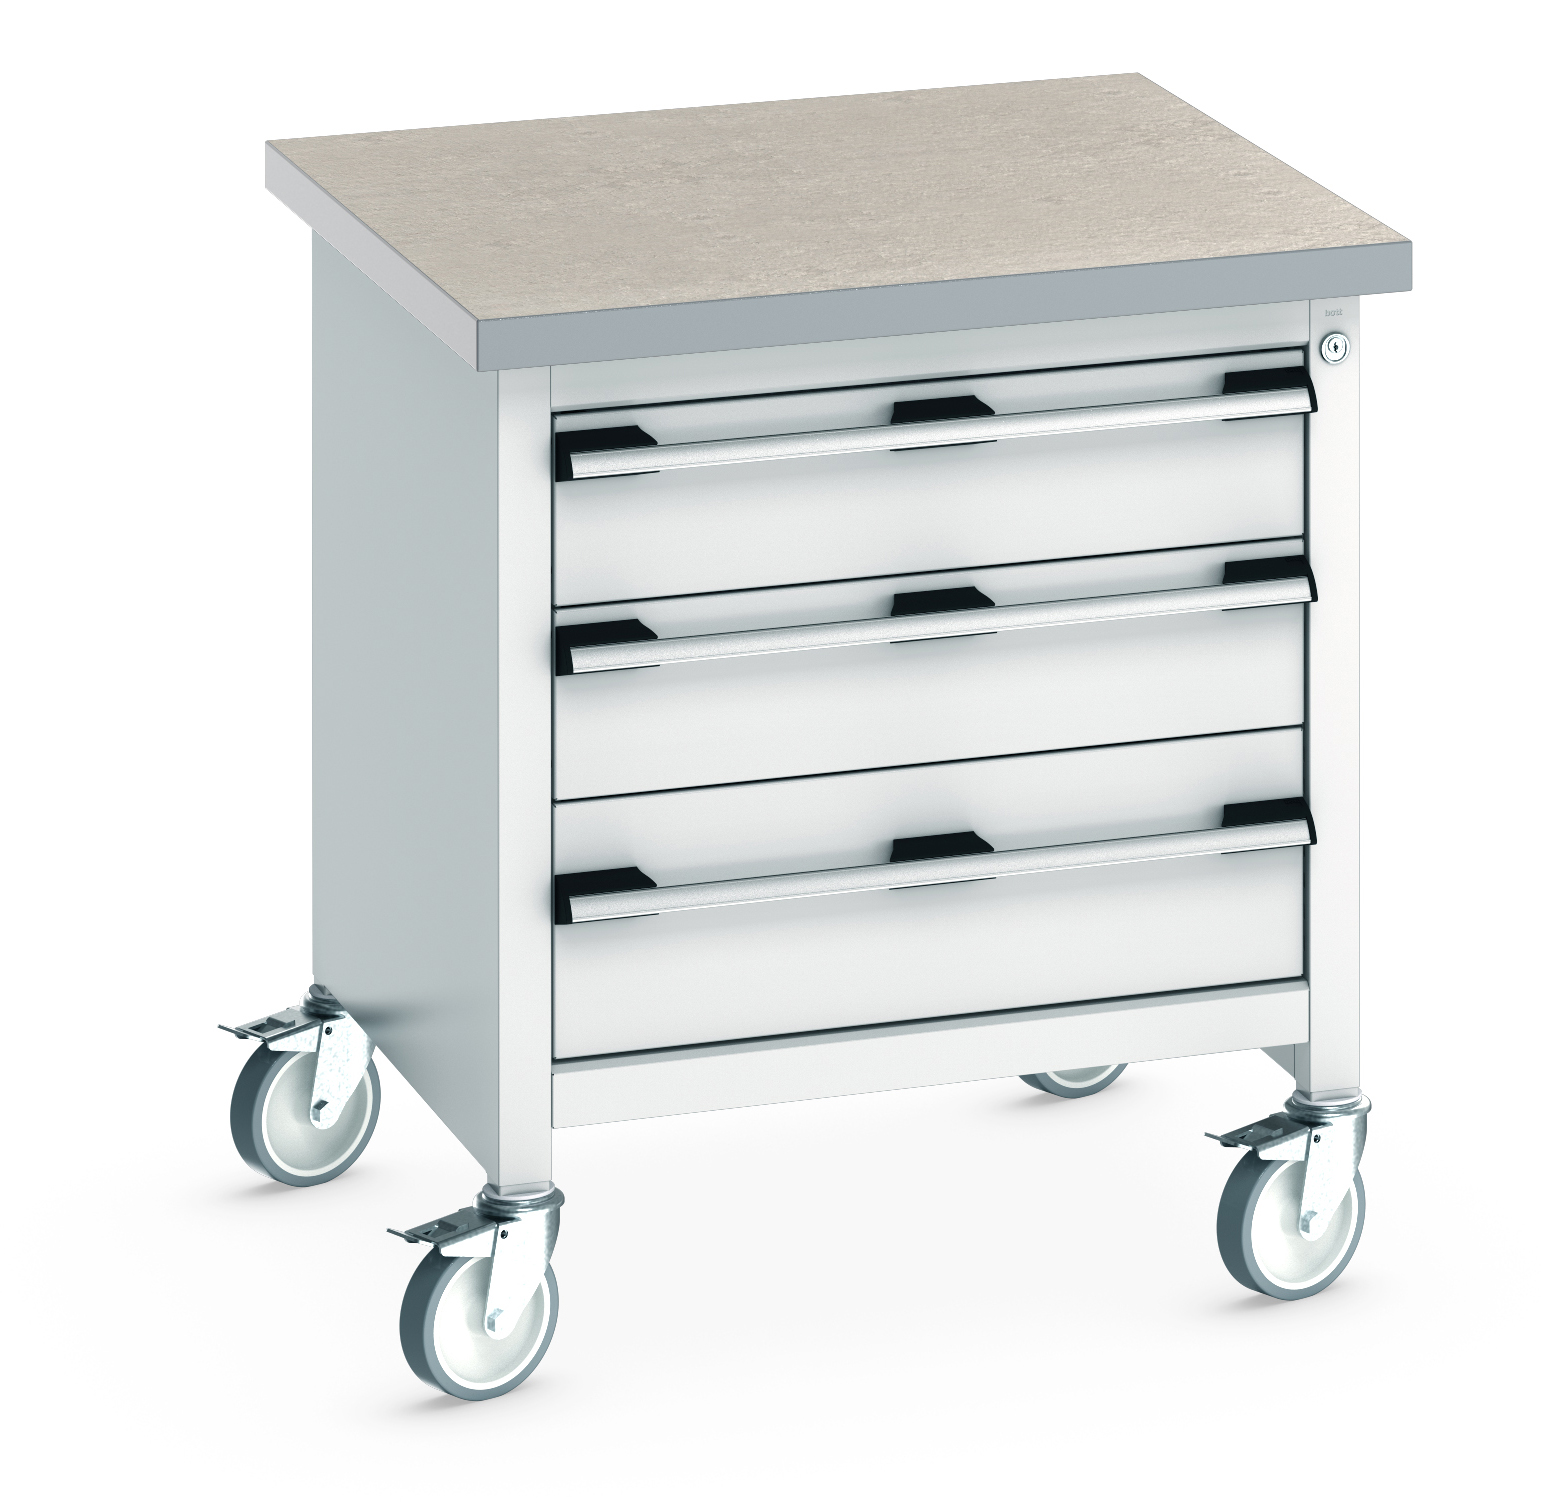 Bott Cubio Mobile Storage Bench With 3 Drawer Cabinet - 41002093.16V